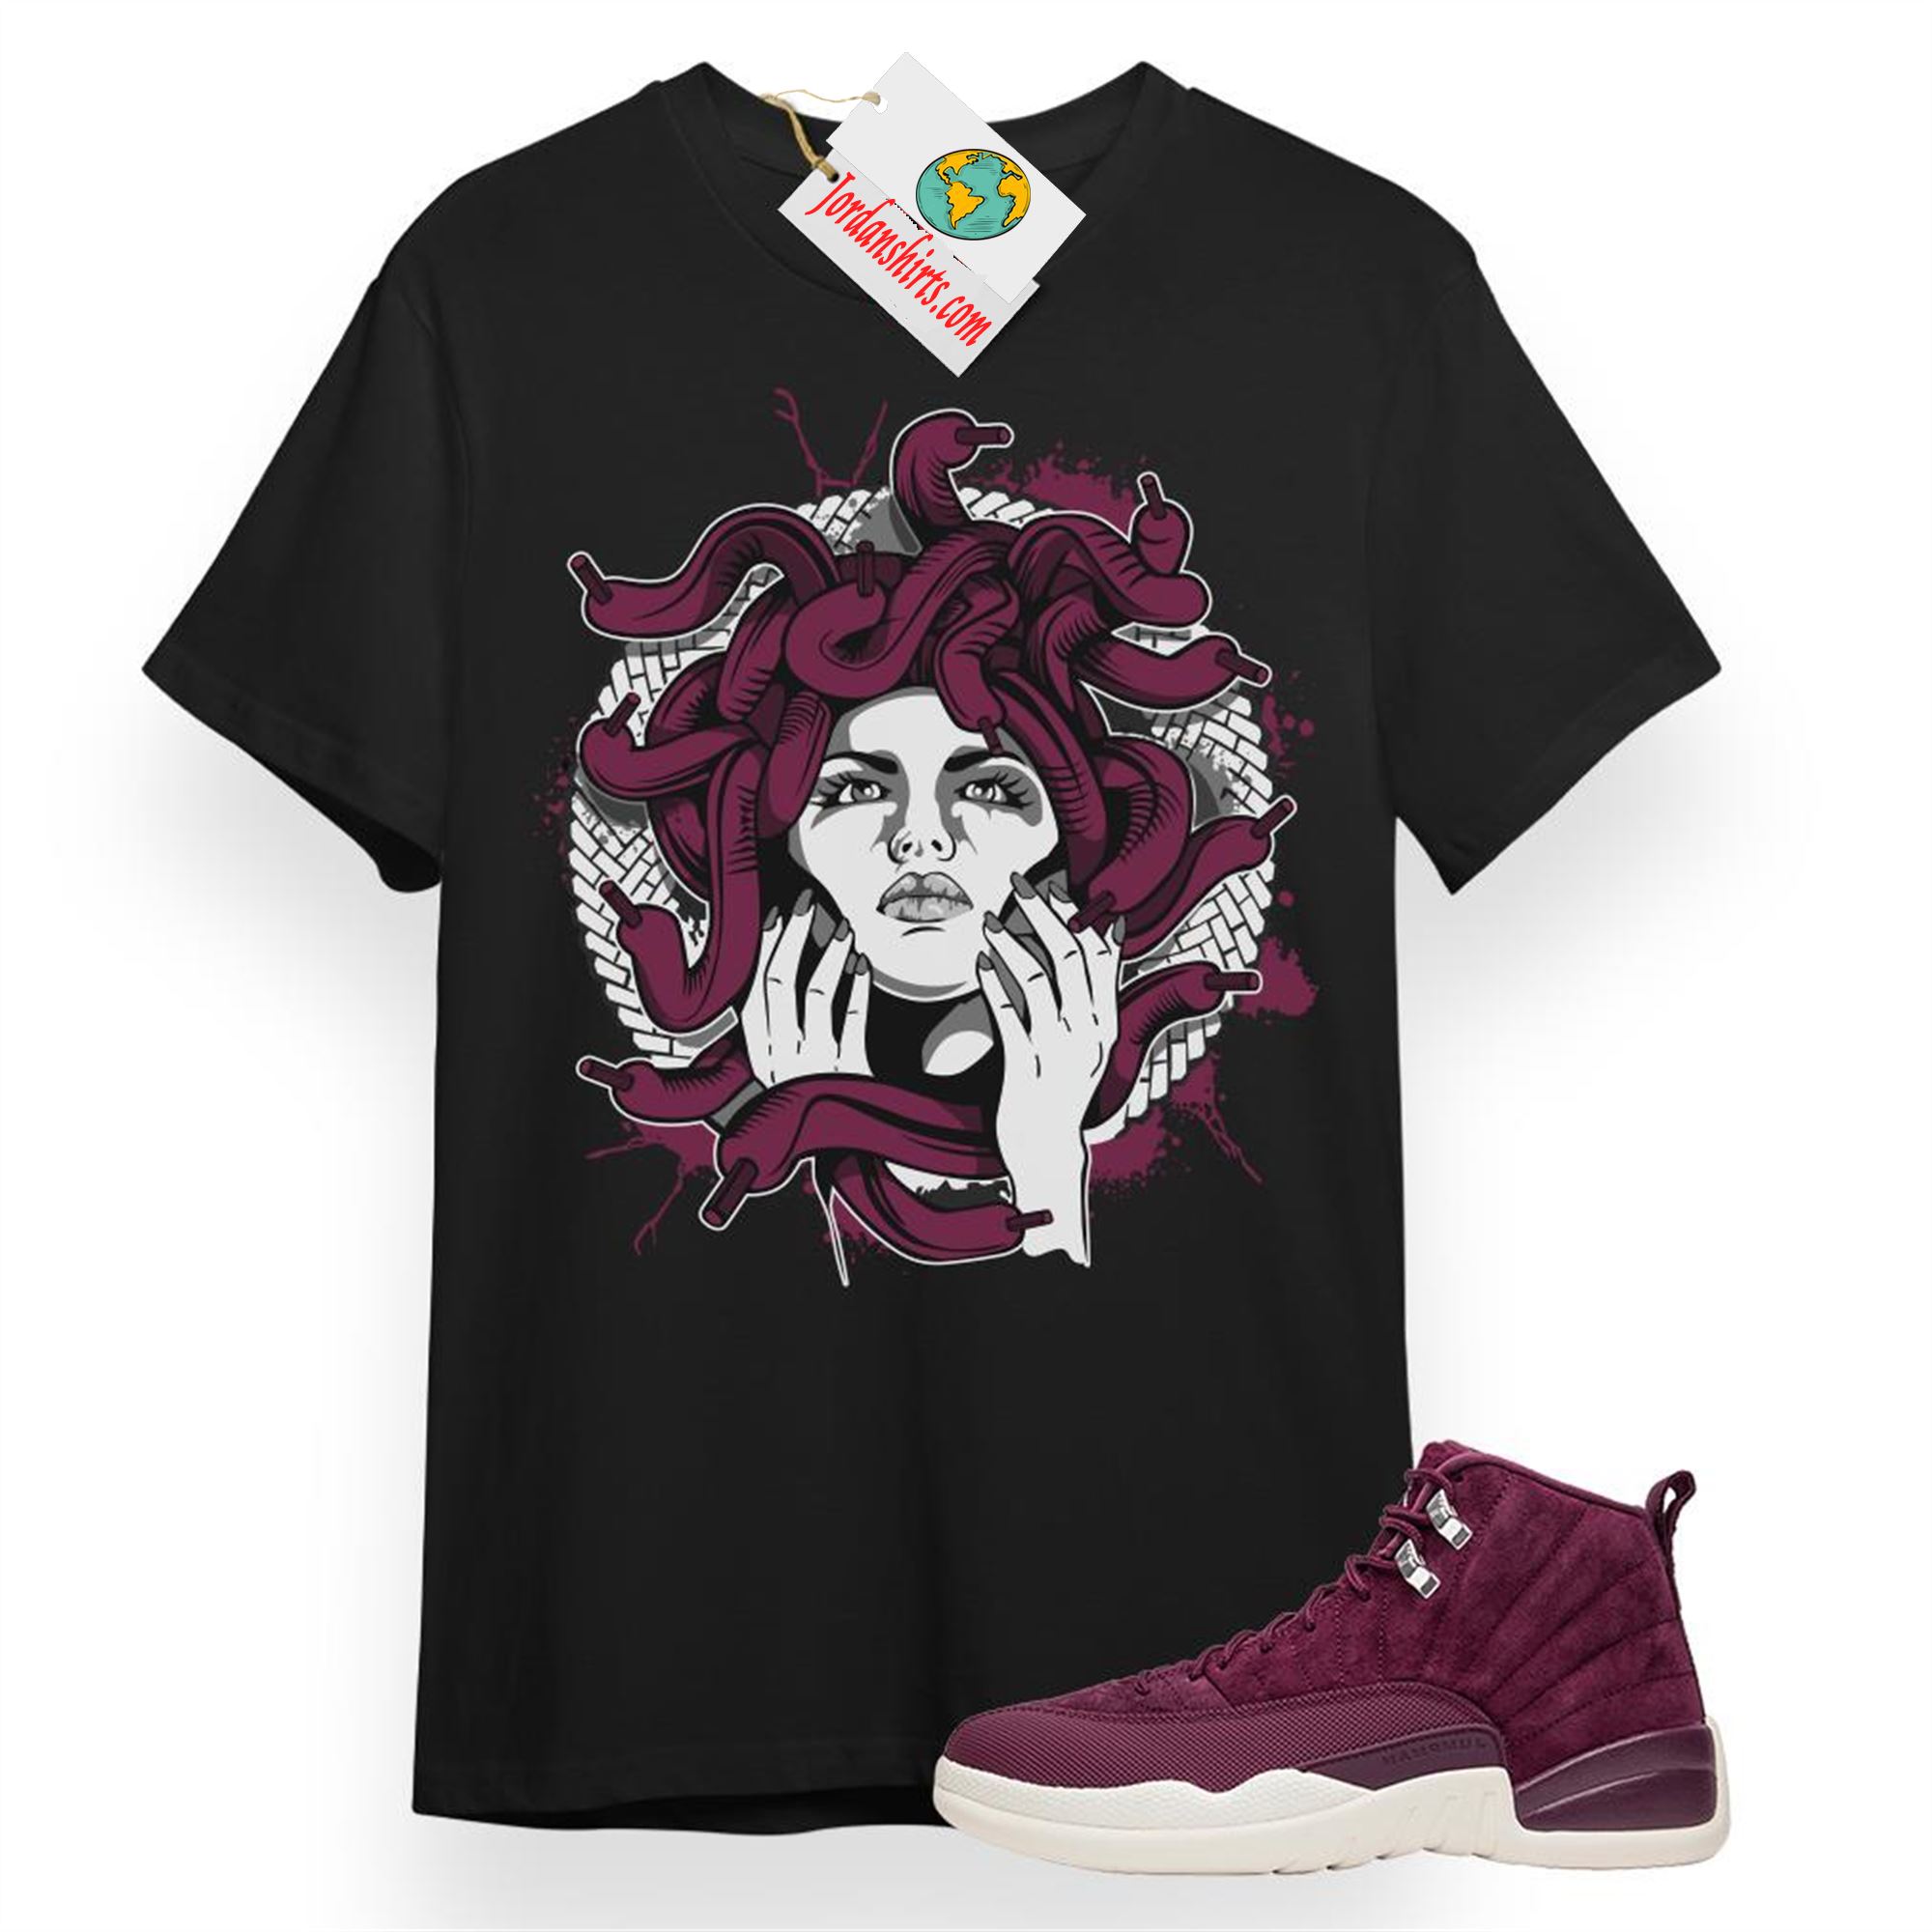 Jordan 12 Shirt, Medusa Black T-shirt Air Jordan 12 Bordeaux 12s Full Size Up To 5xl